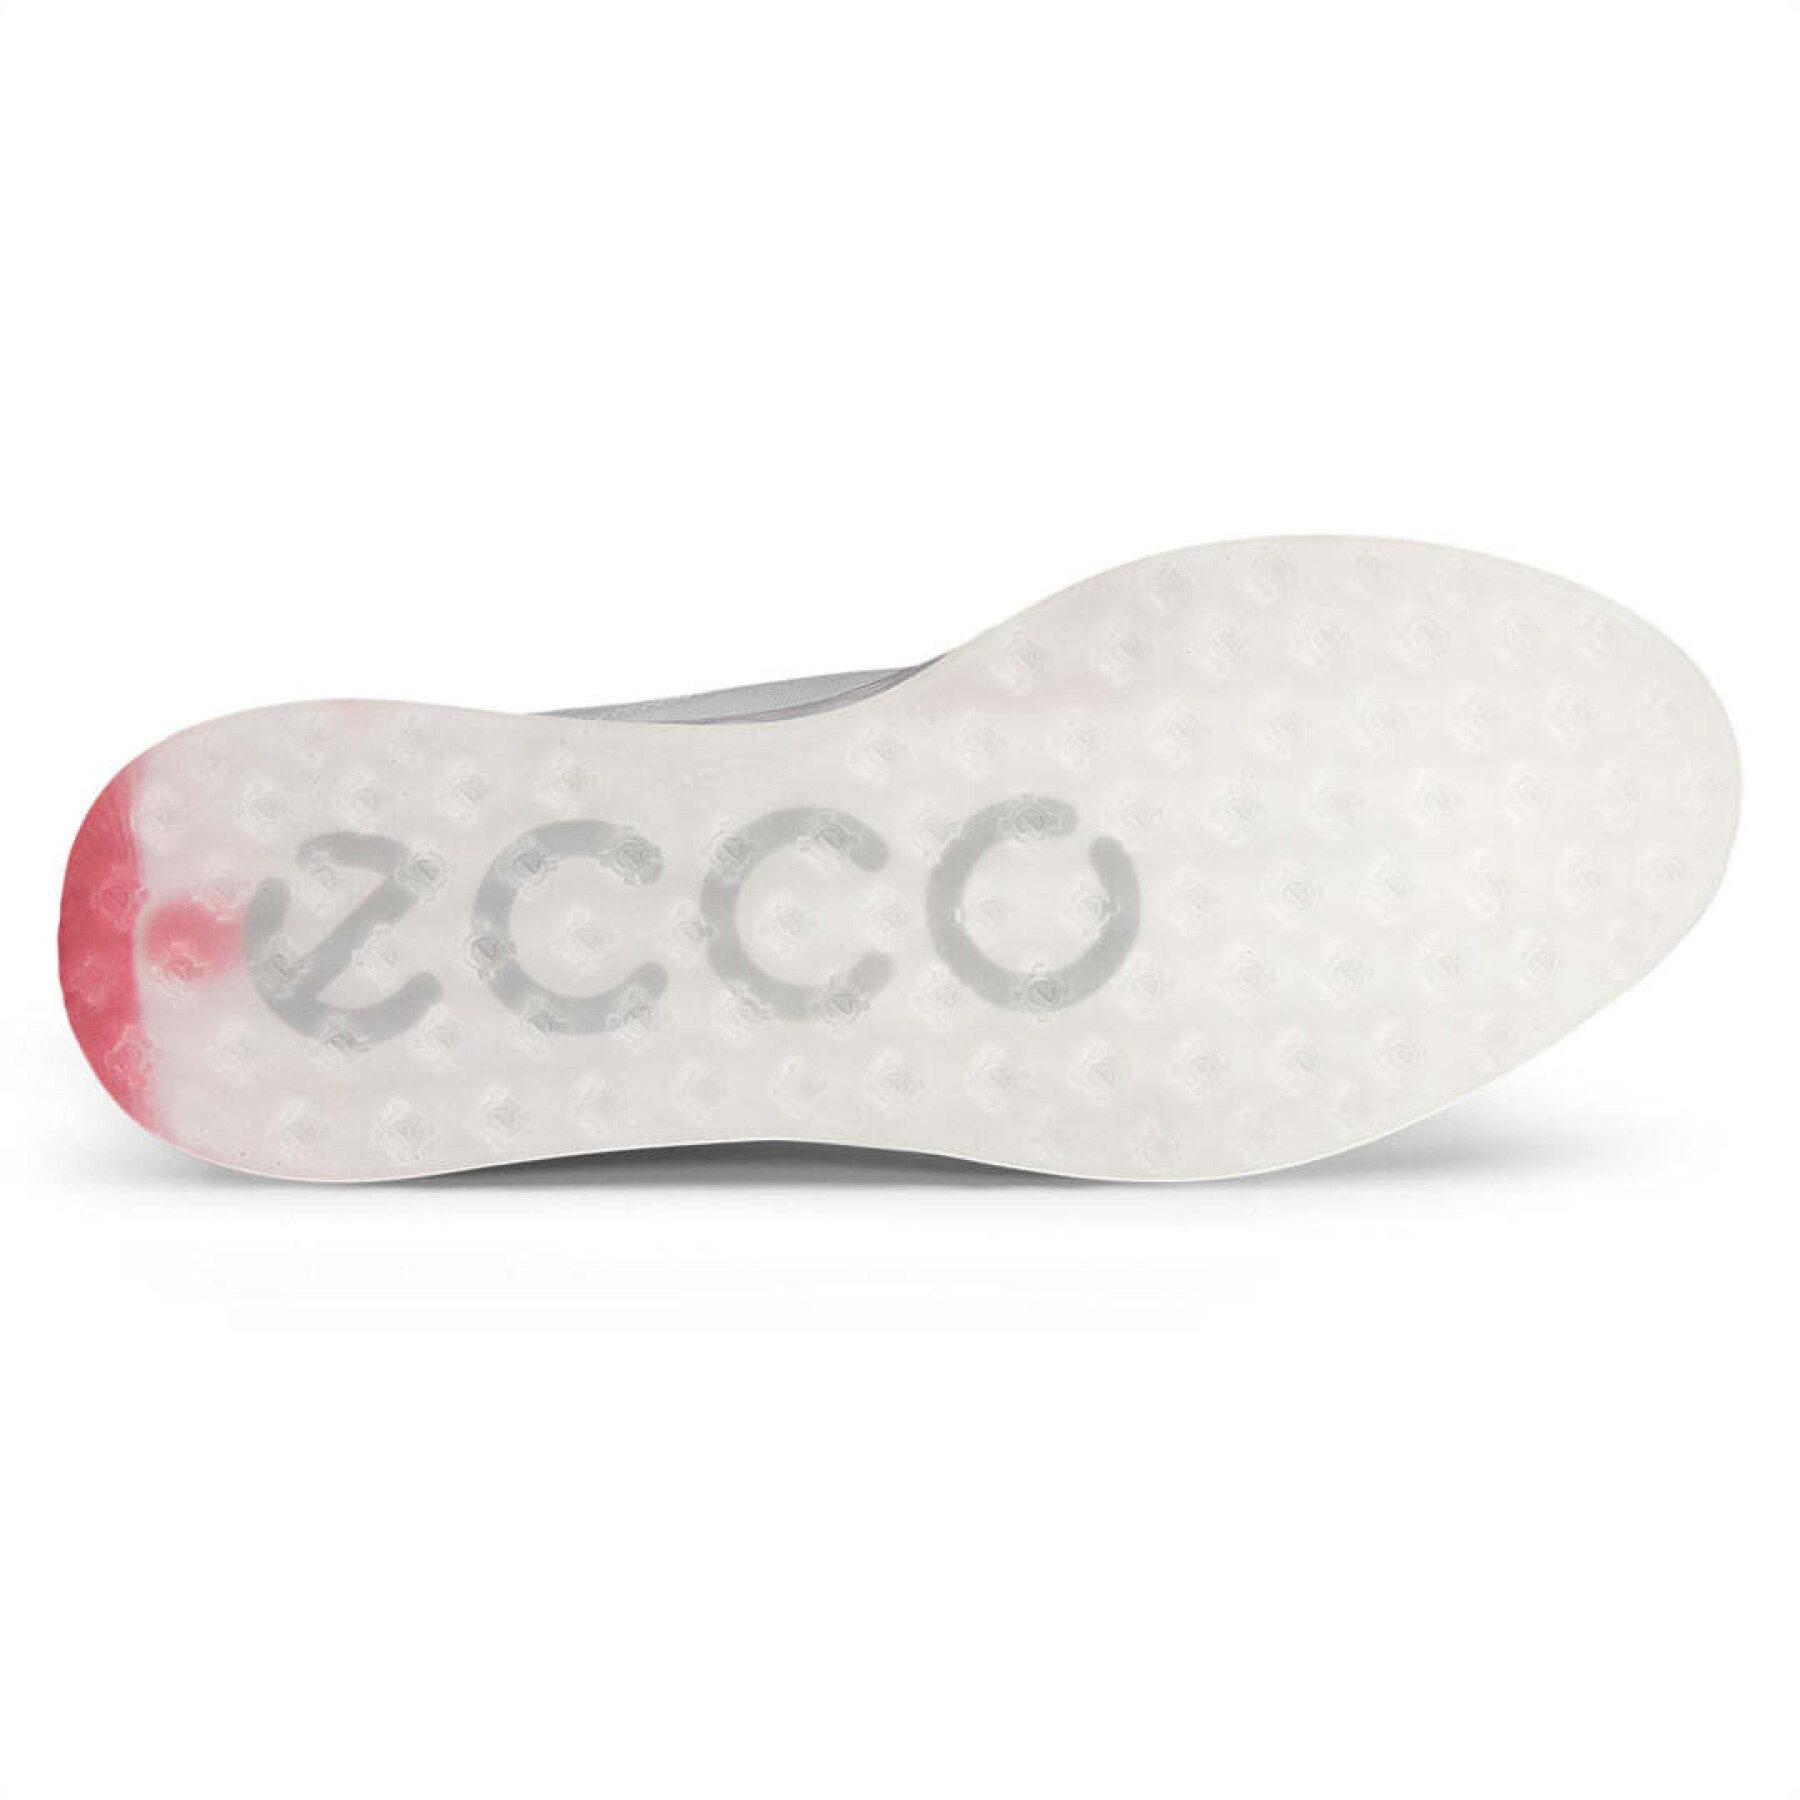 Chaussures de golf sans crampons femme Ecco S-Three